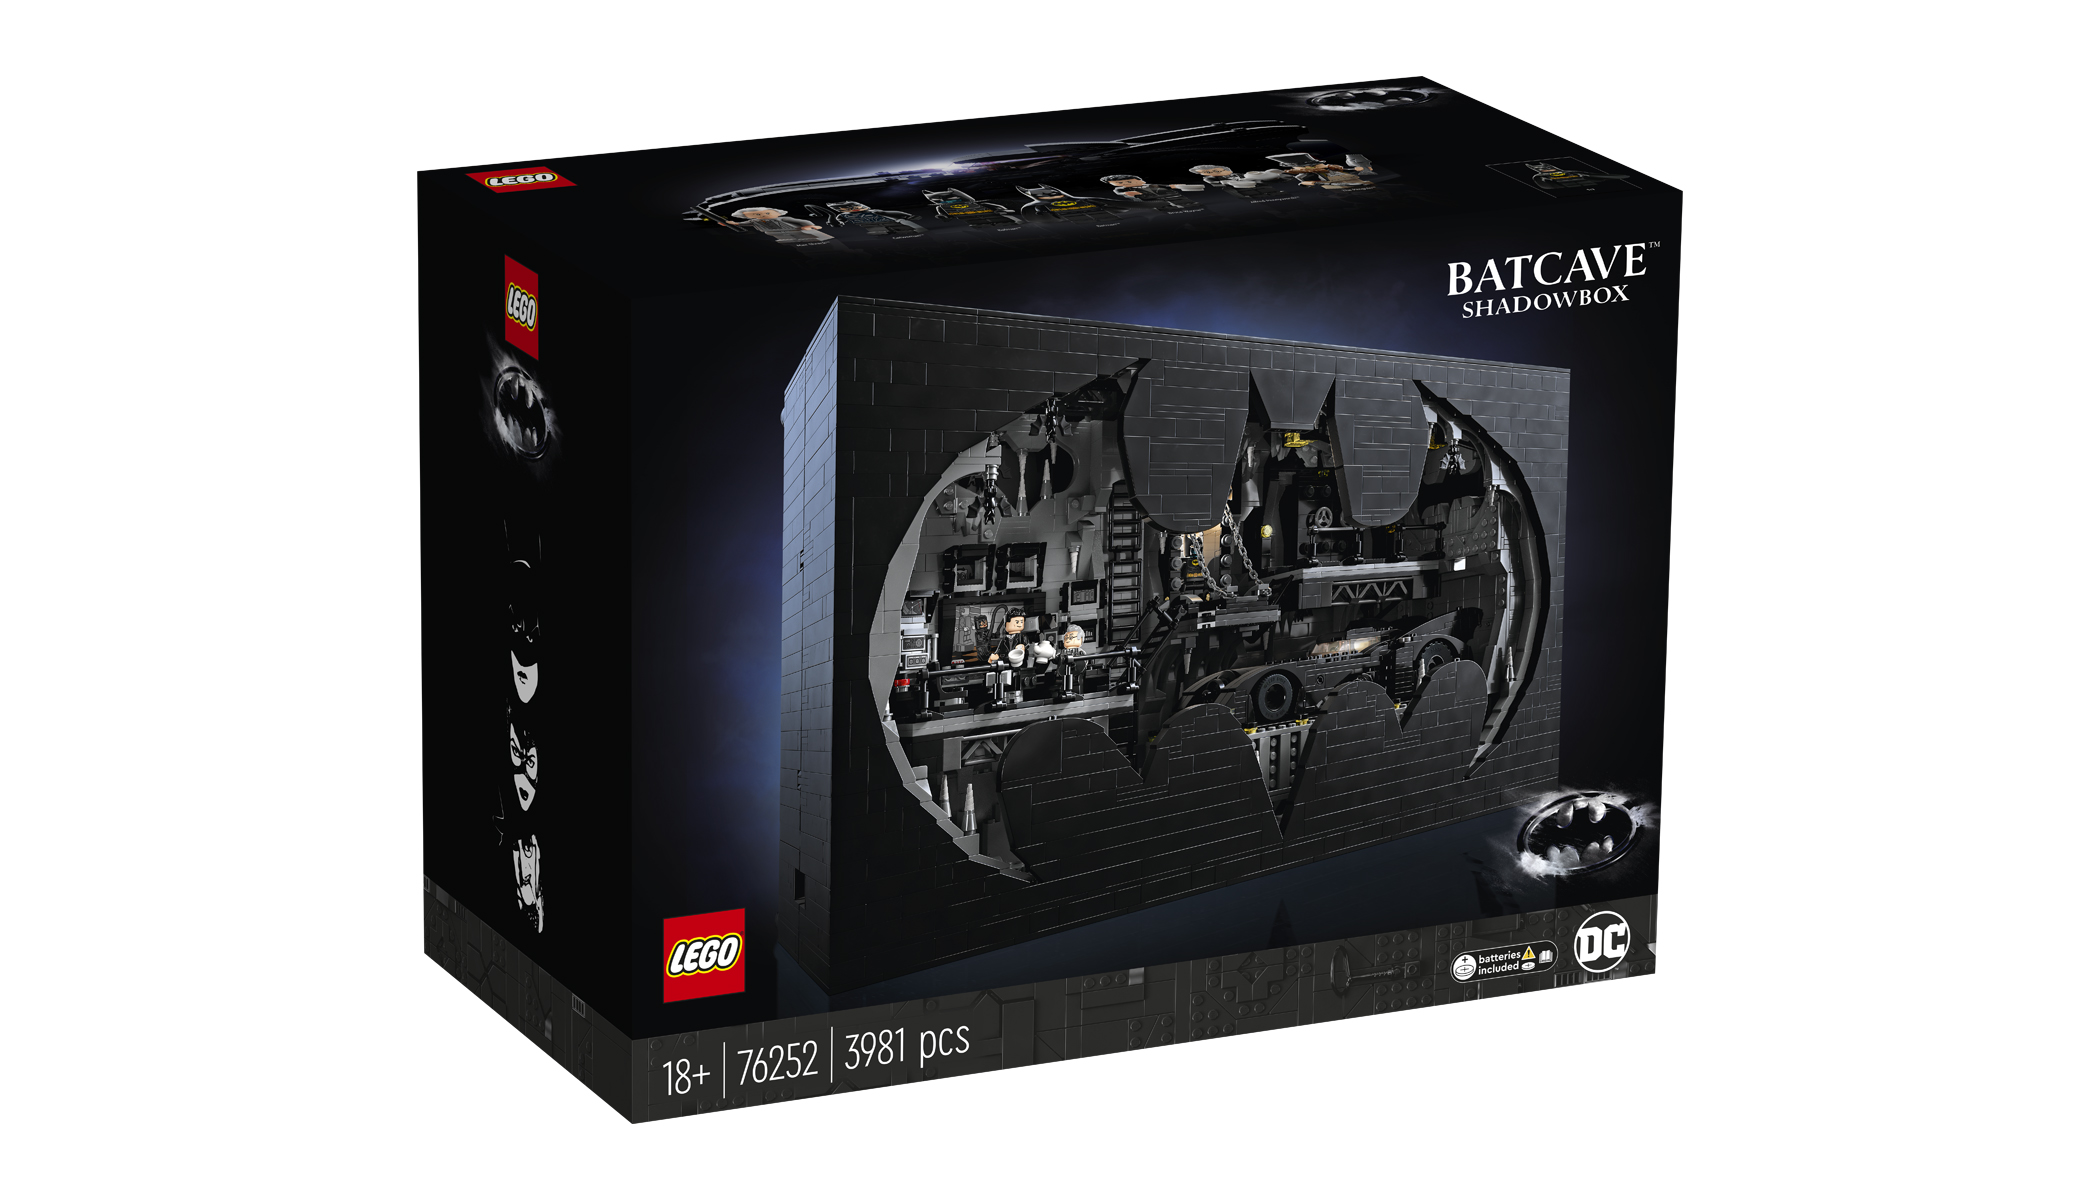 NEW $450 LEGO Batman Returns Batcave Leak - Including the Flash Movie? 